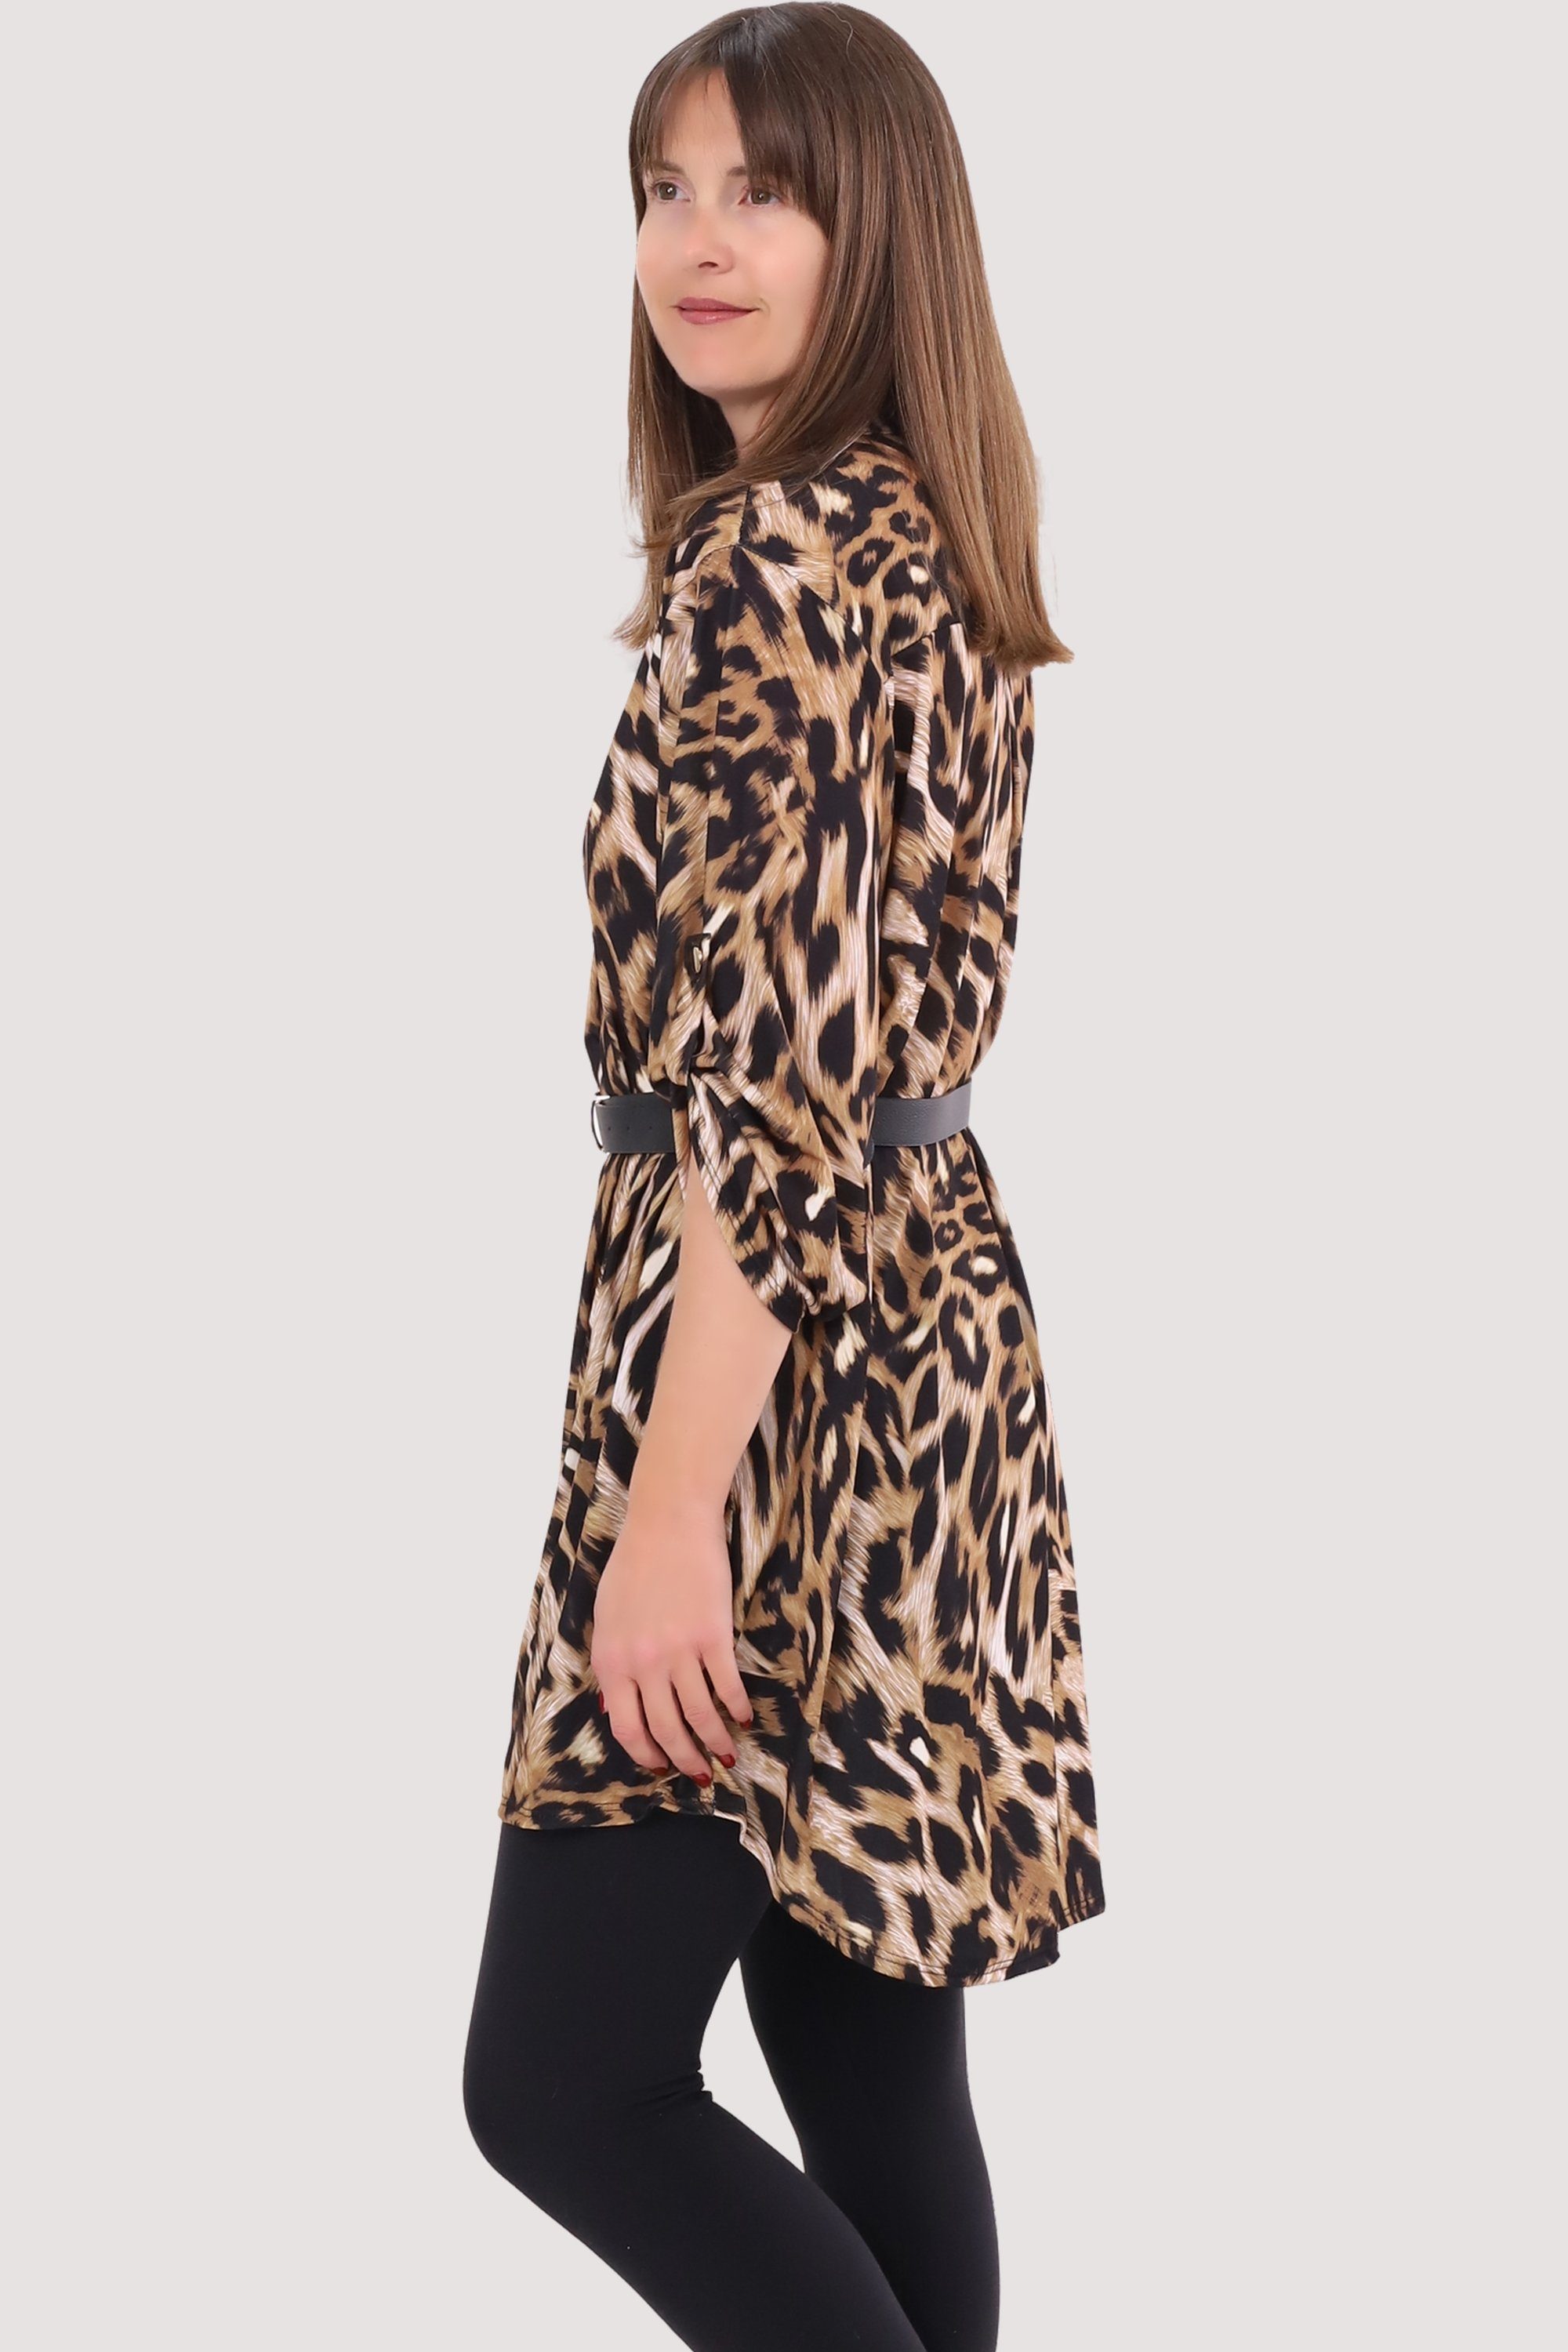 malito more Einheitsgröße mit 23203 Gürtel Gepard fashion Bluse Animalprint Tunika 3 Kleid than Druckkleid